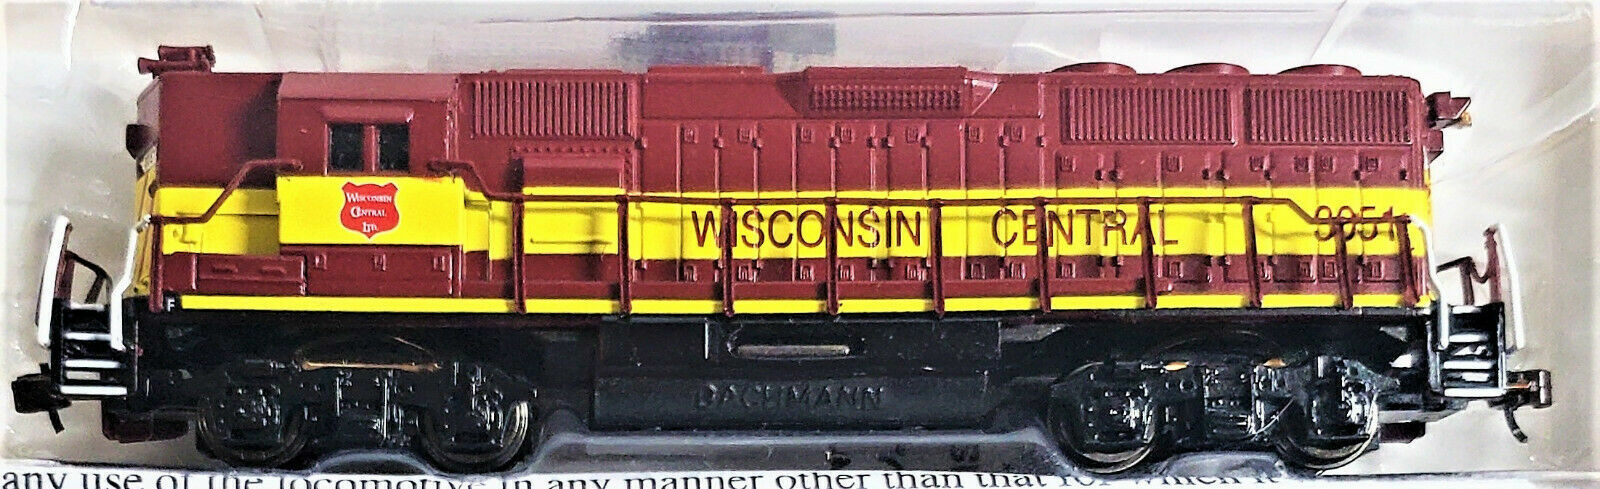 Wisconsin Central, N Scale EMD GP50 Diesel Locomotive, Road#3051, Bachmann 61297